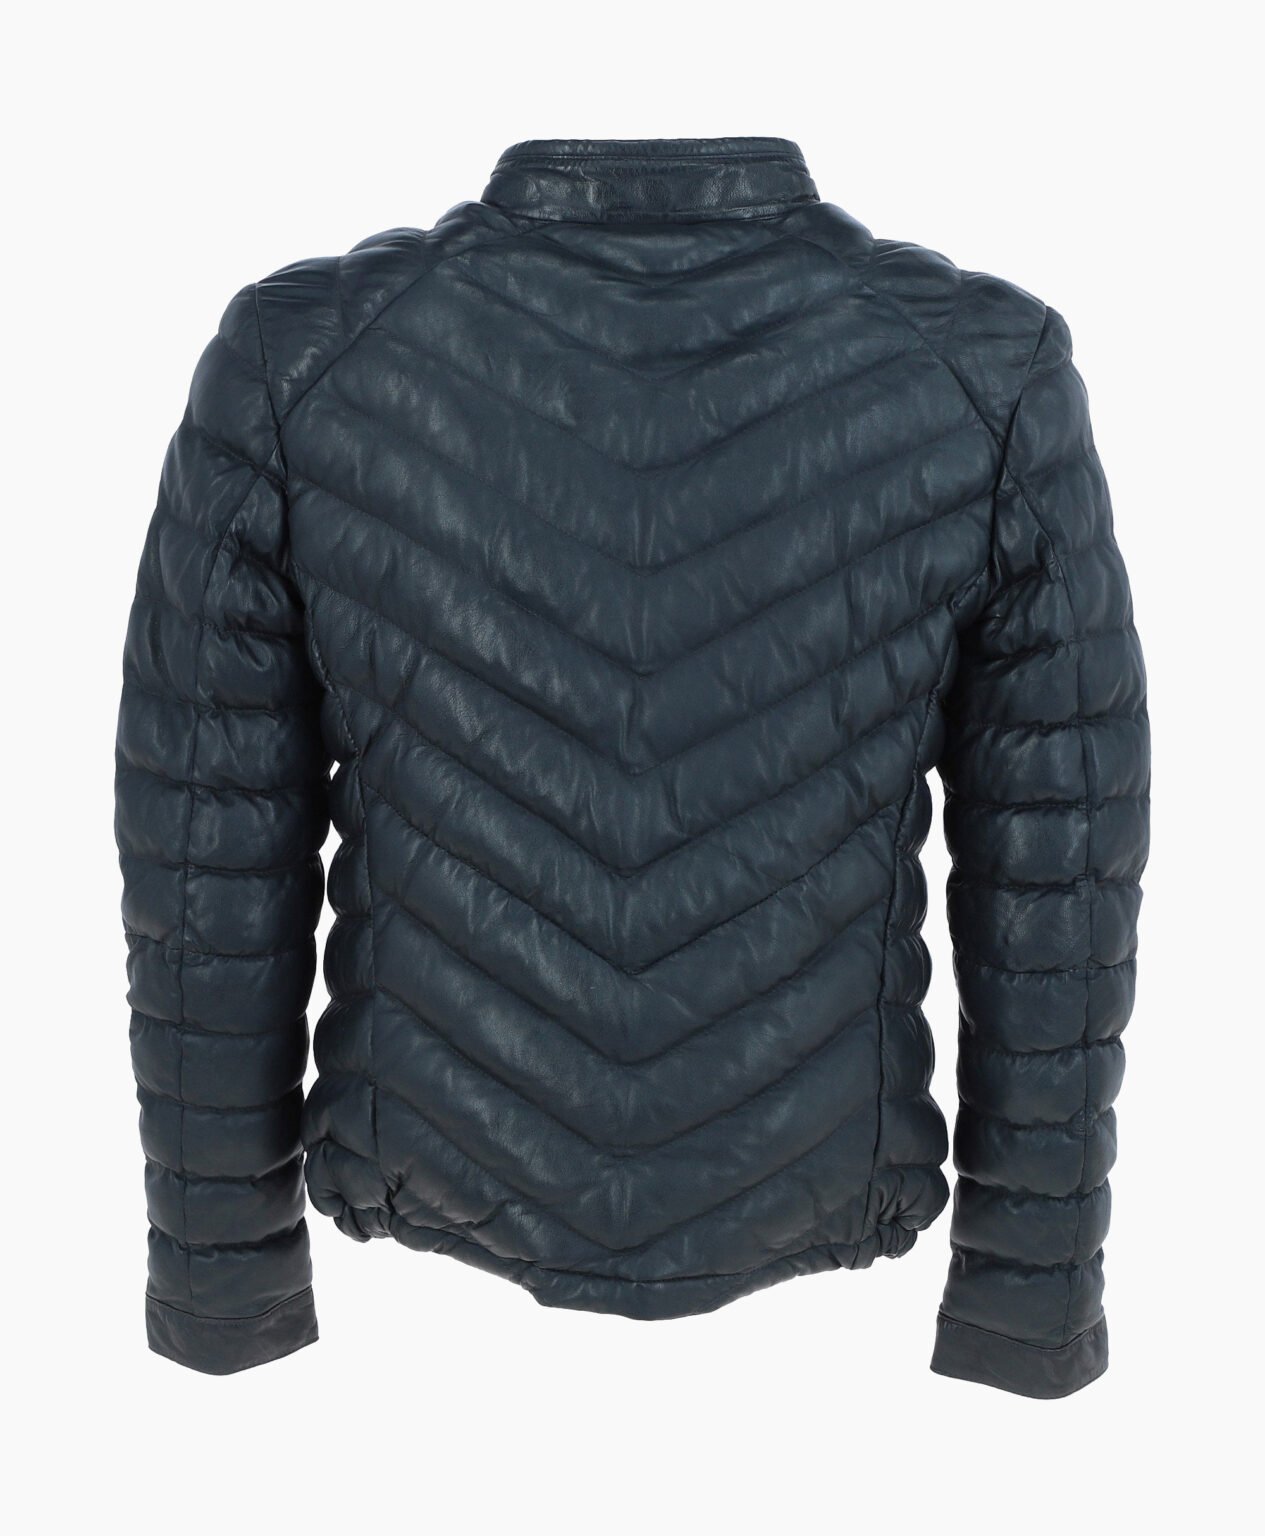 vogue-jacket-leather-puffer-jacket-navy-prescott-image202